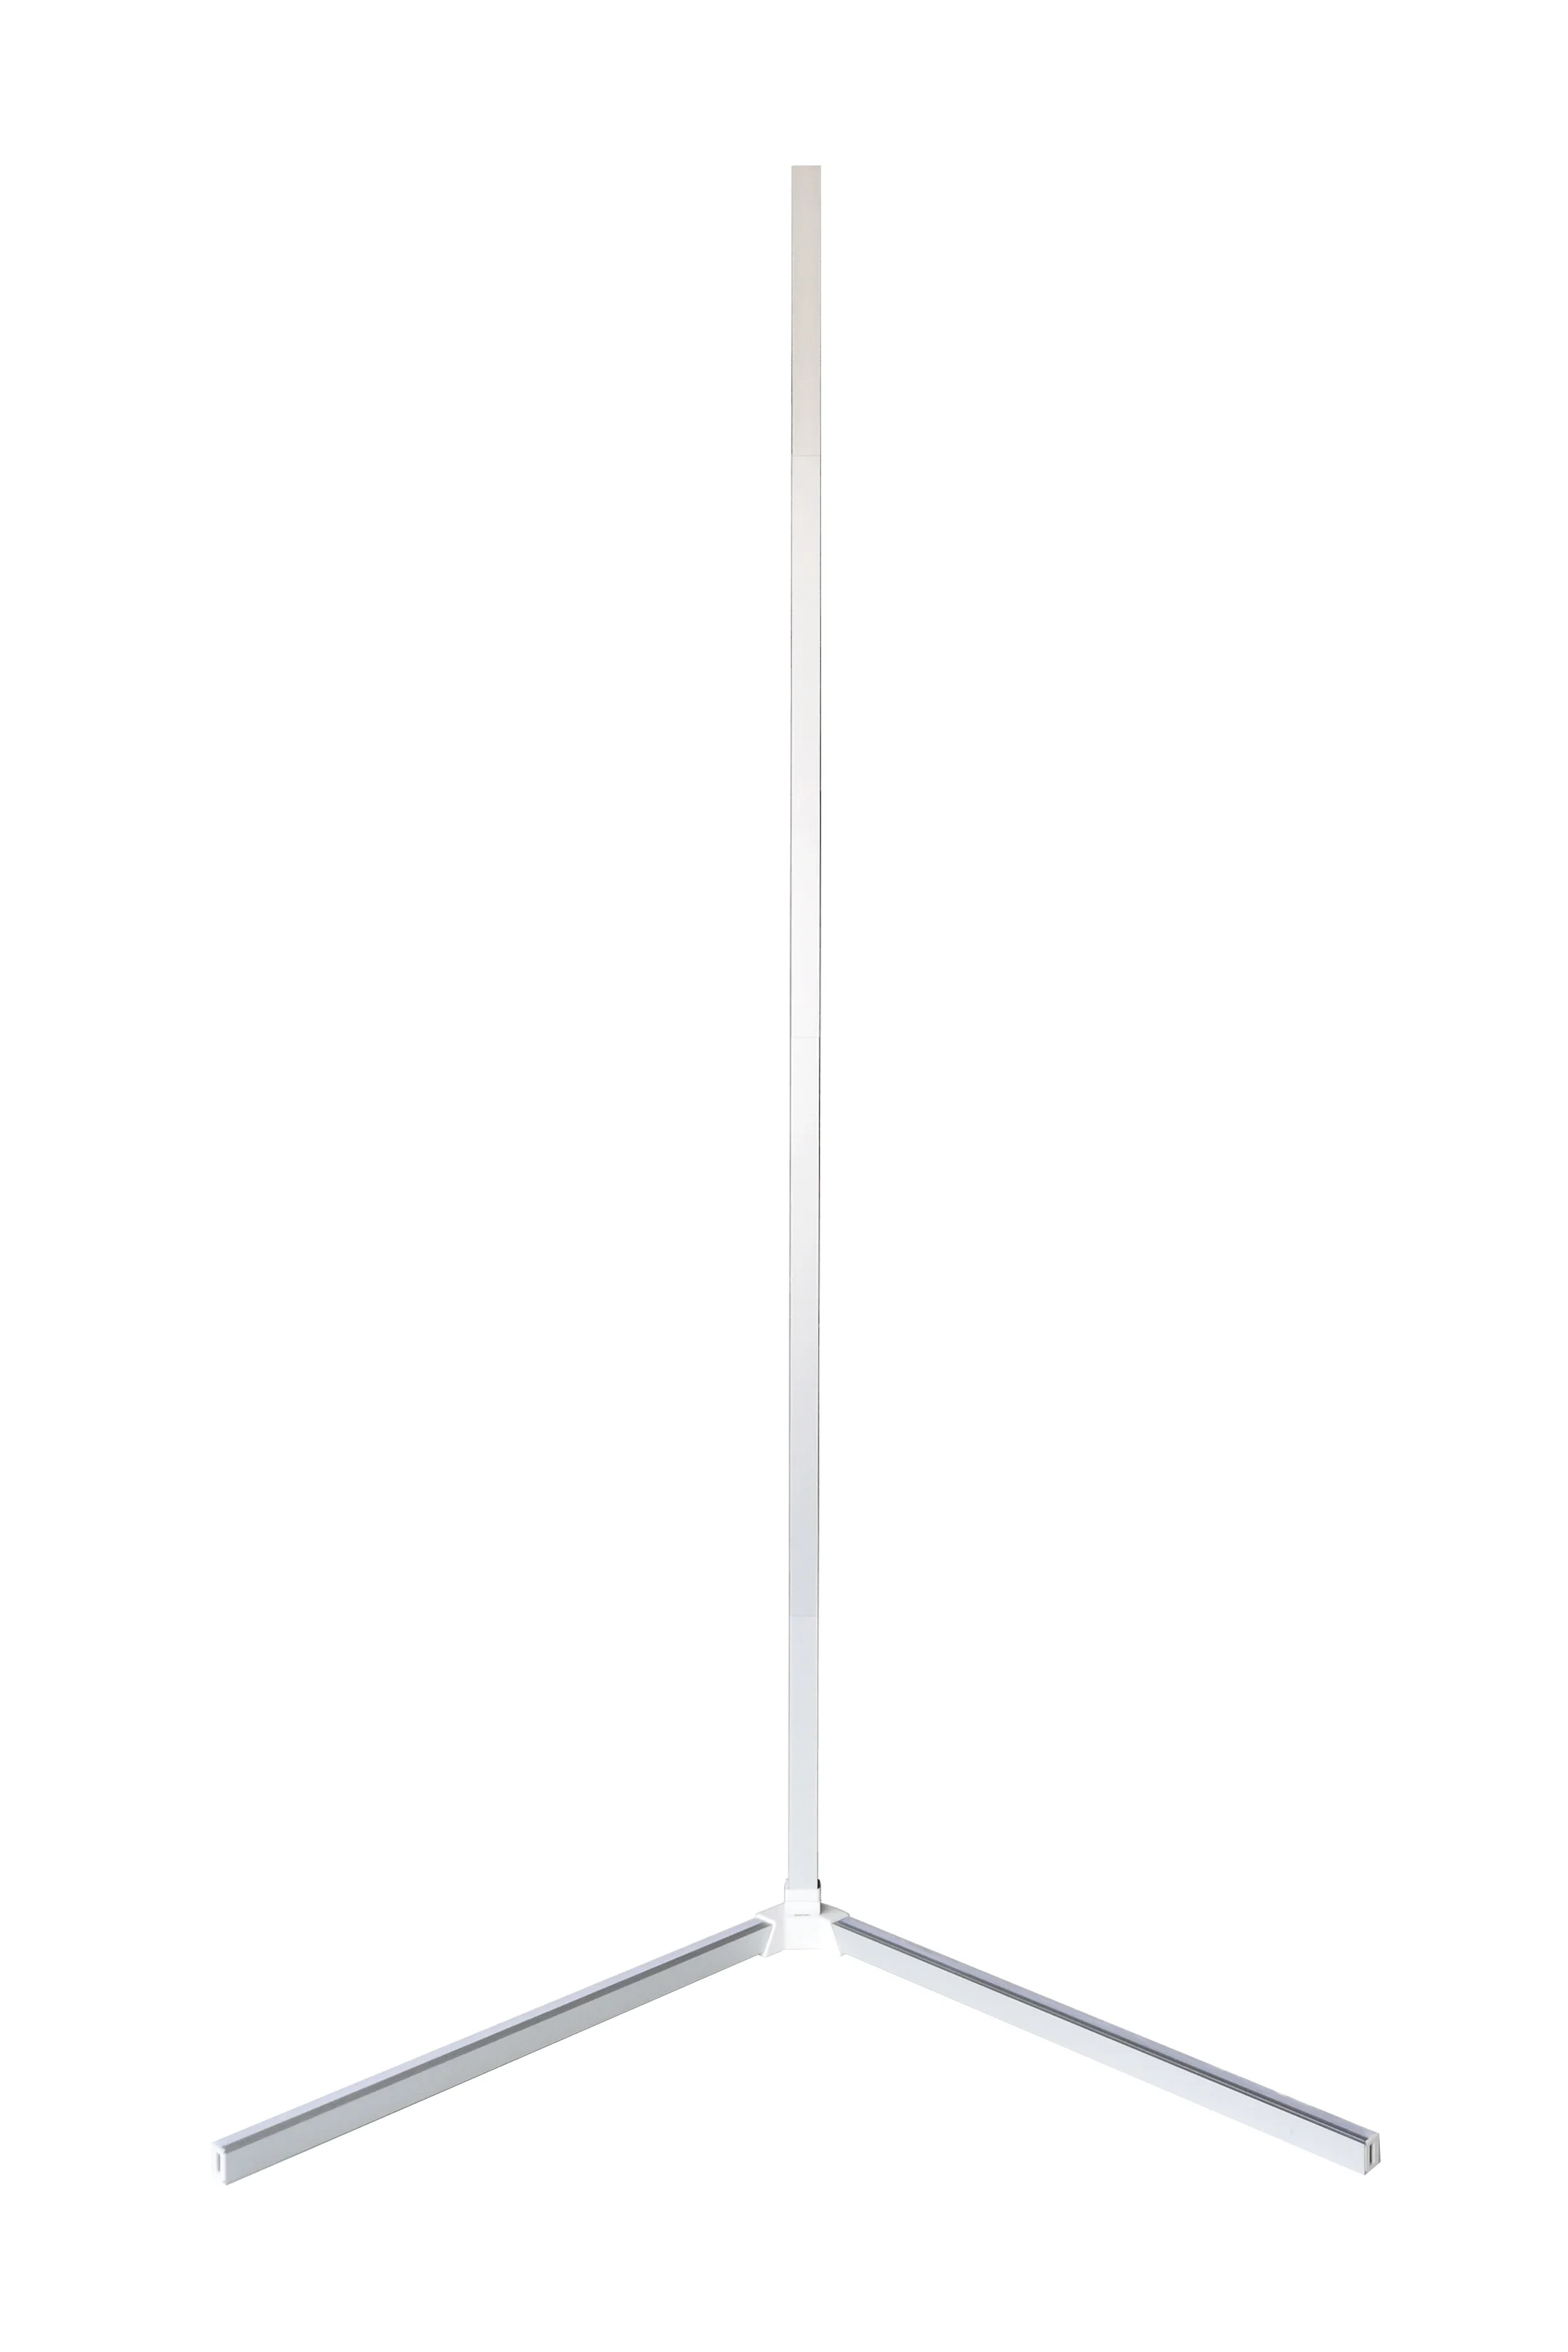 home decor modern standing floor lamp new product ideas 2020 minimalist creative triple floor lamp Nordic corner standing lamp